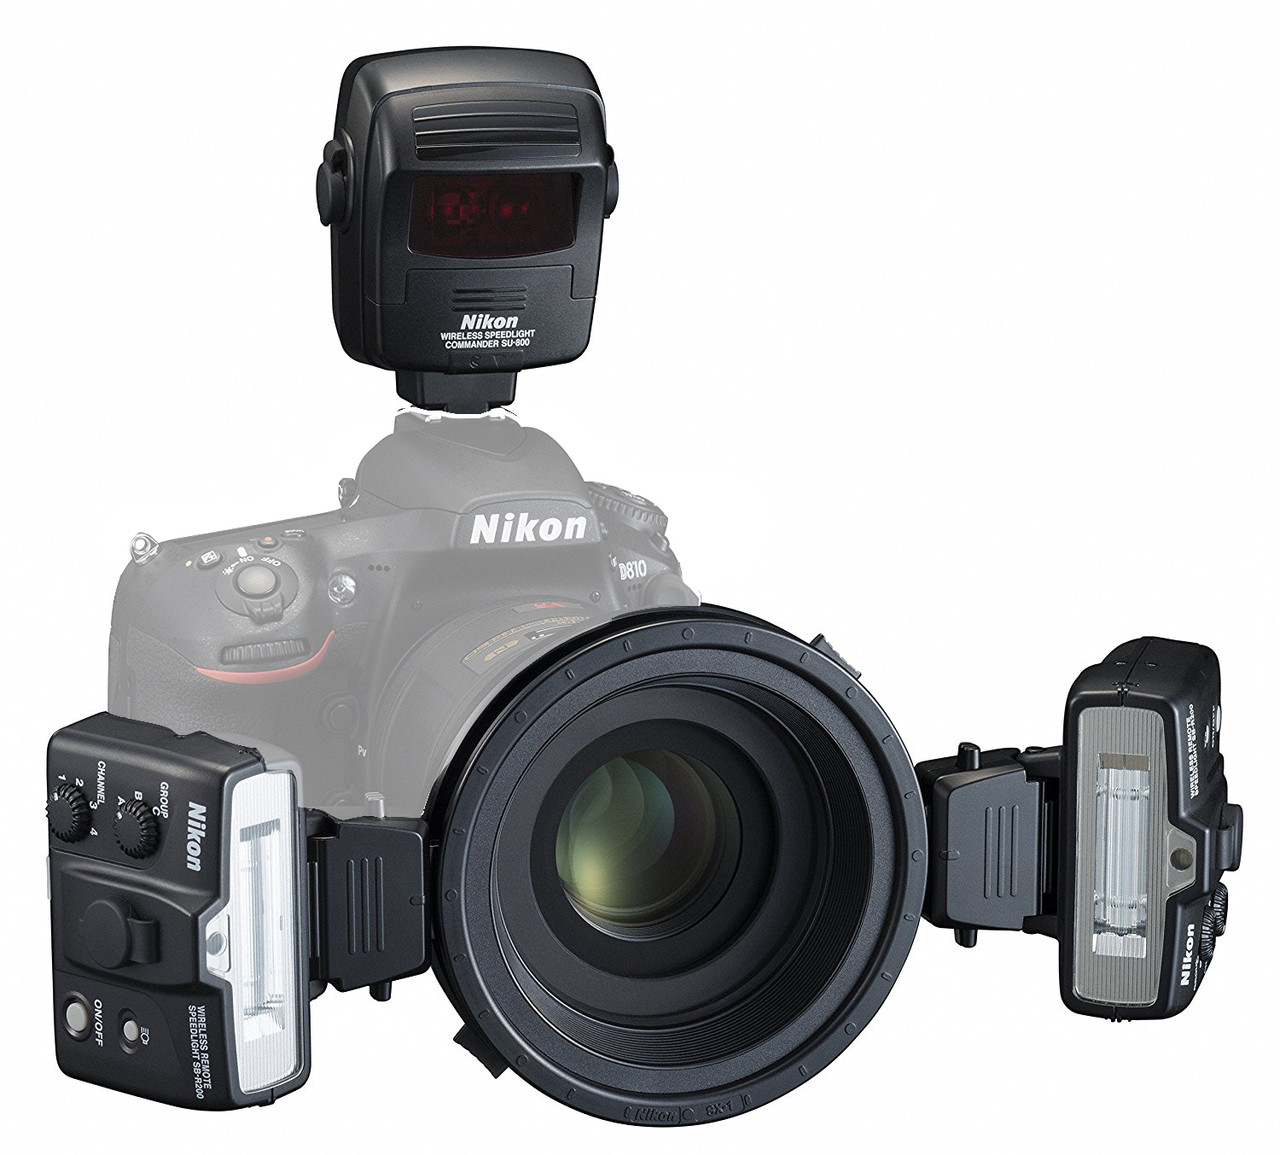 Nikon R1C1 Wireless Close-Up Speedlight Kit - Flashes